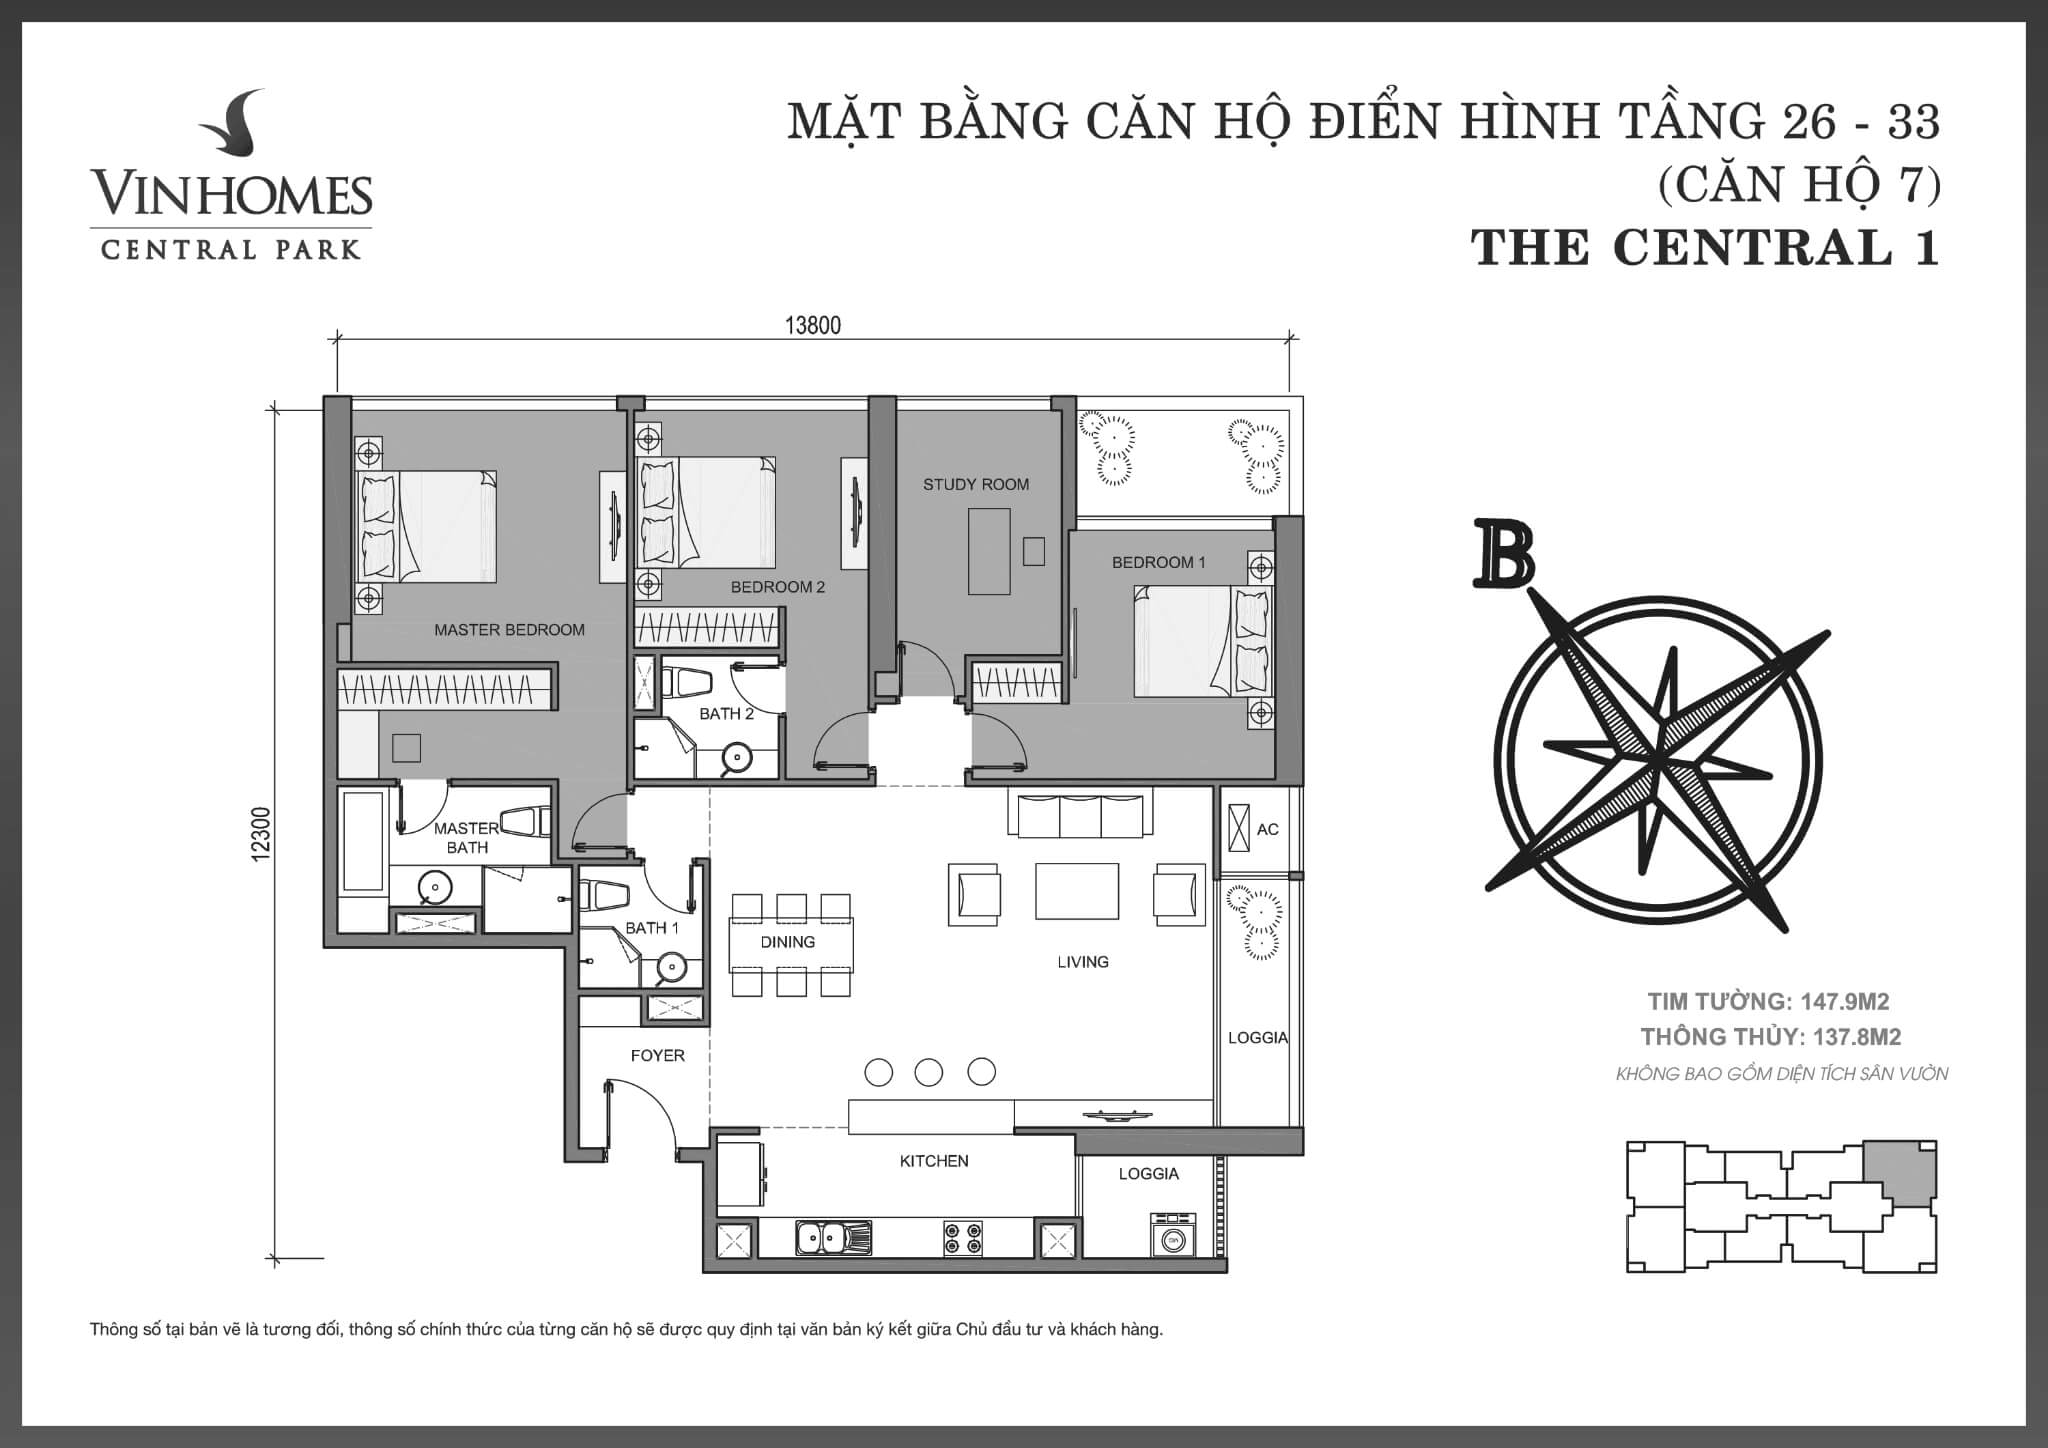 Layout căn hộ số 07 tầng 26-33 tòa The Central 1 - Mặt bằng Vinhomes Central Park